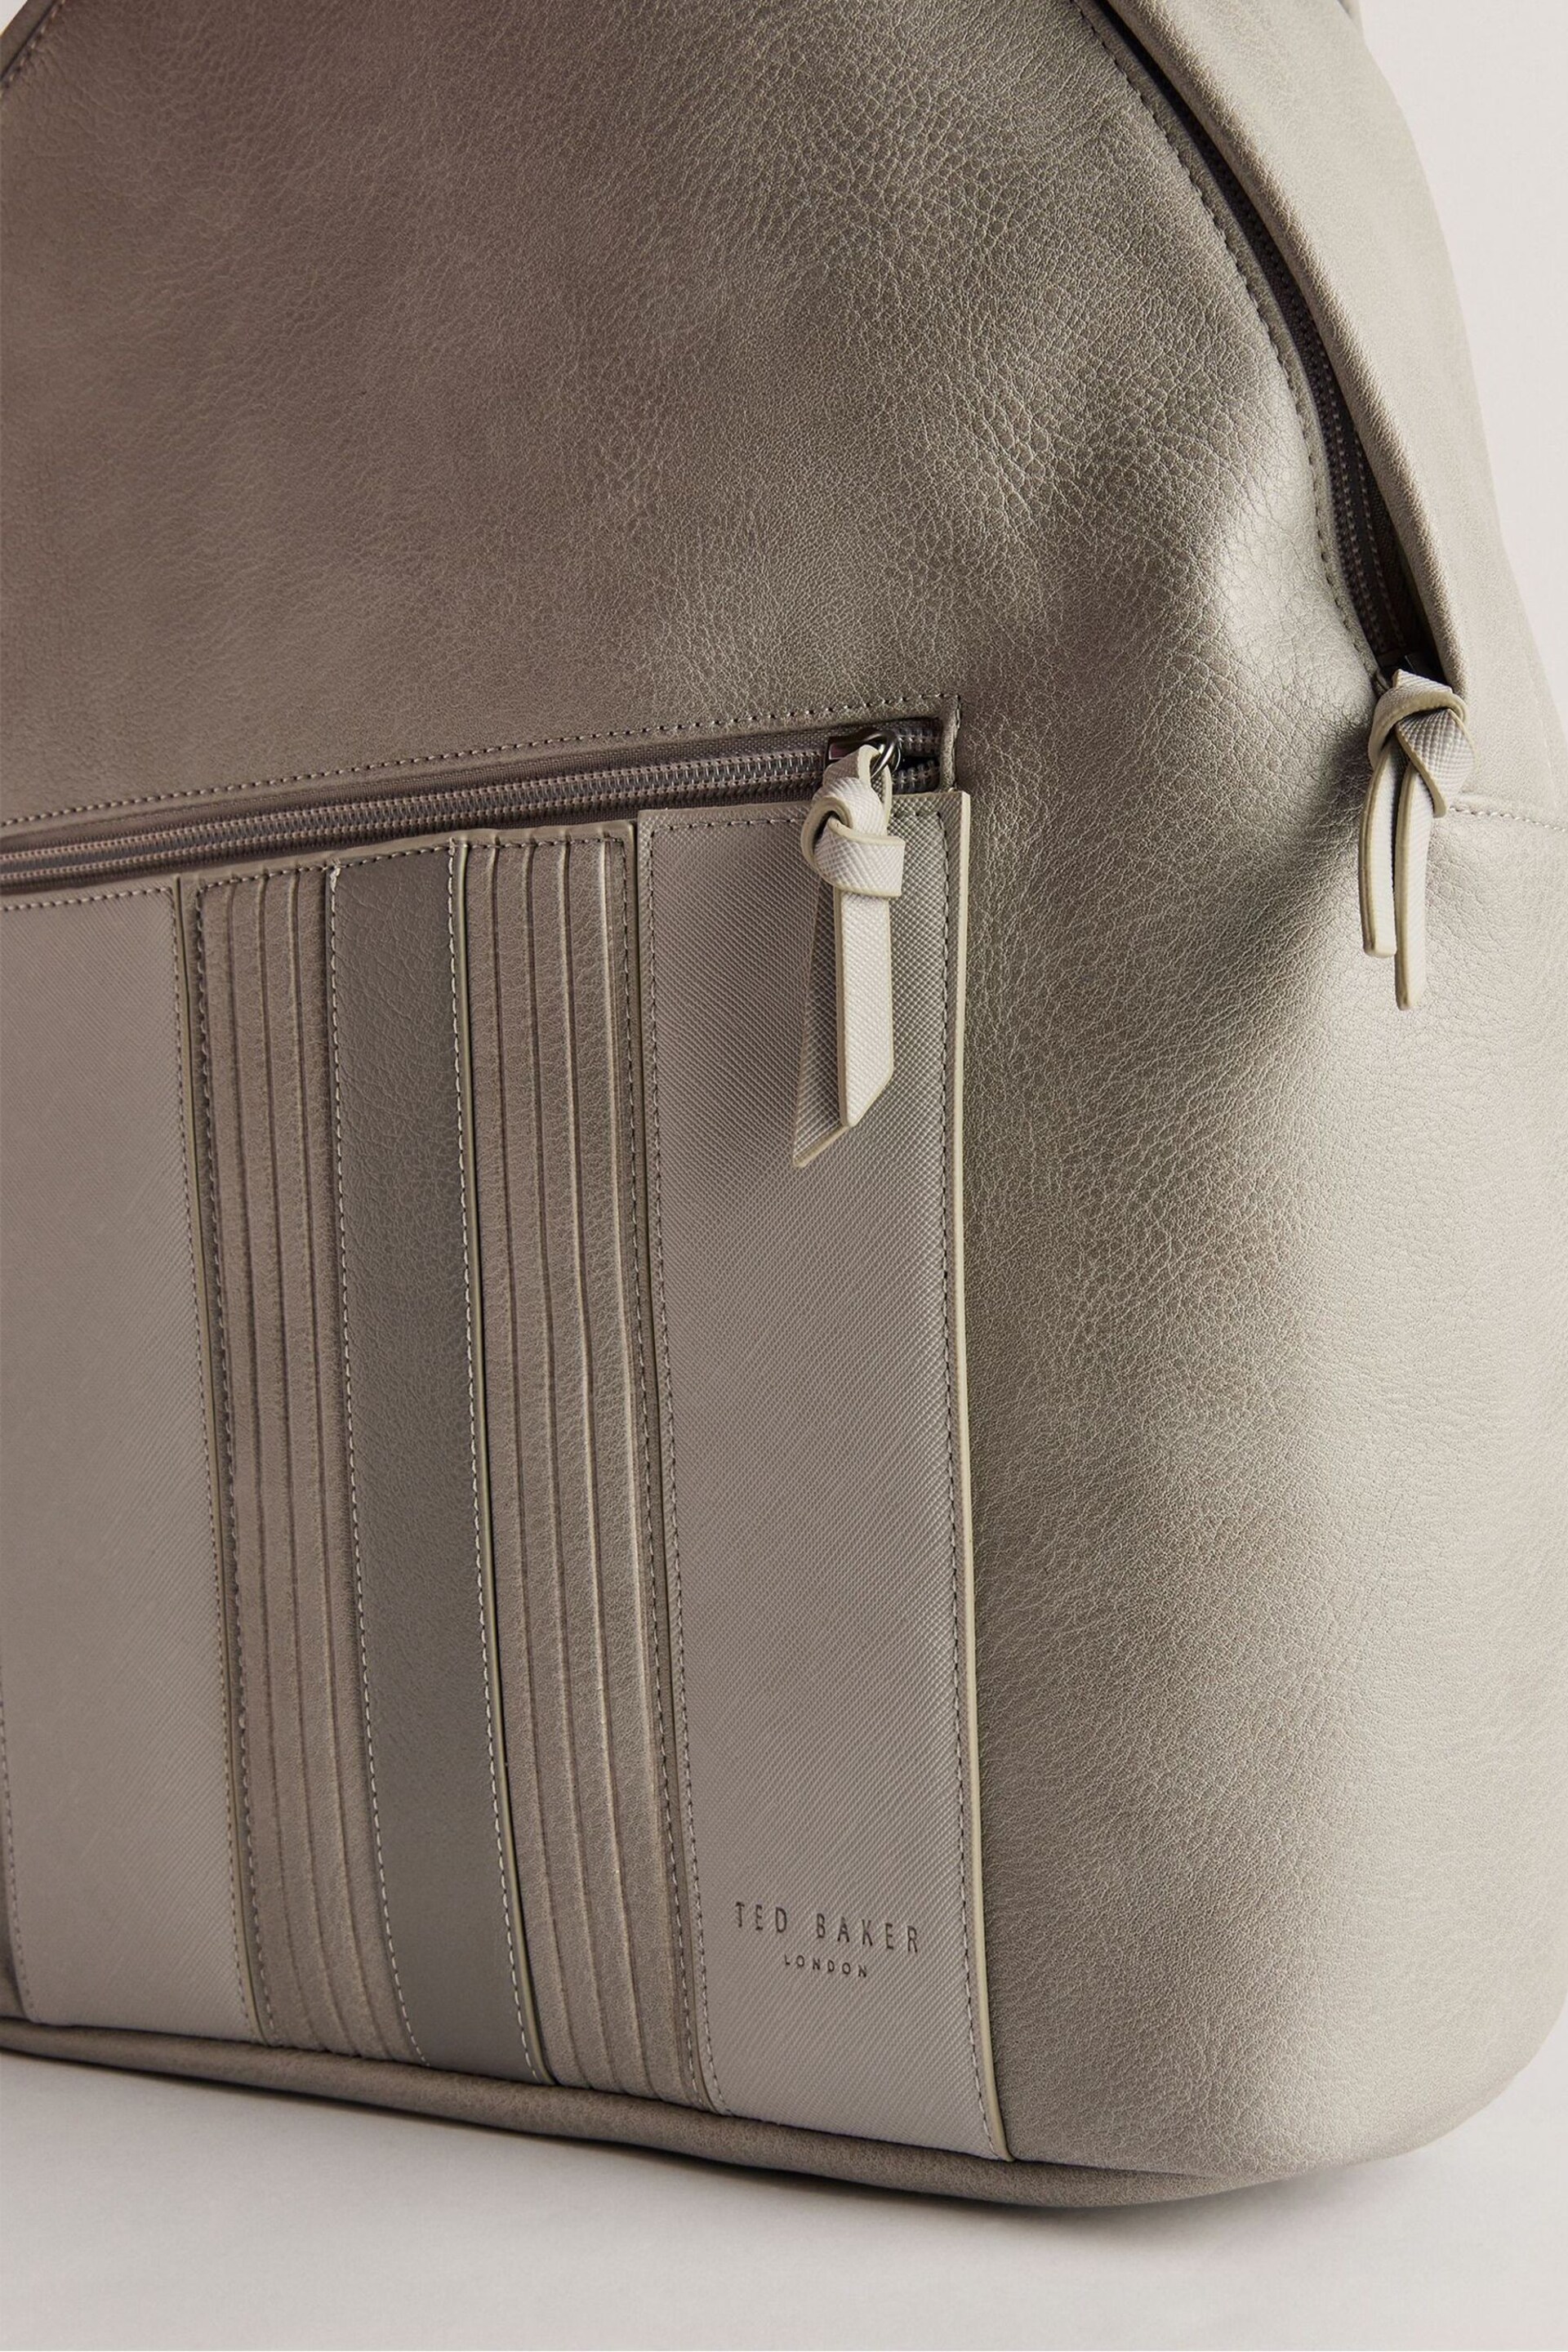 Ted Baker Grey Esentle Striped Backpack - Image 3 of 5